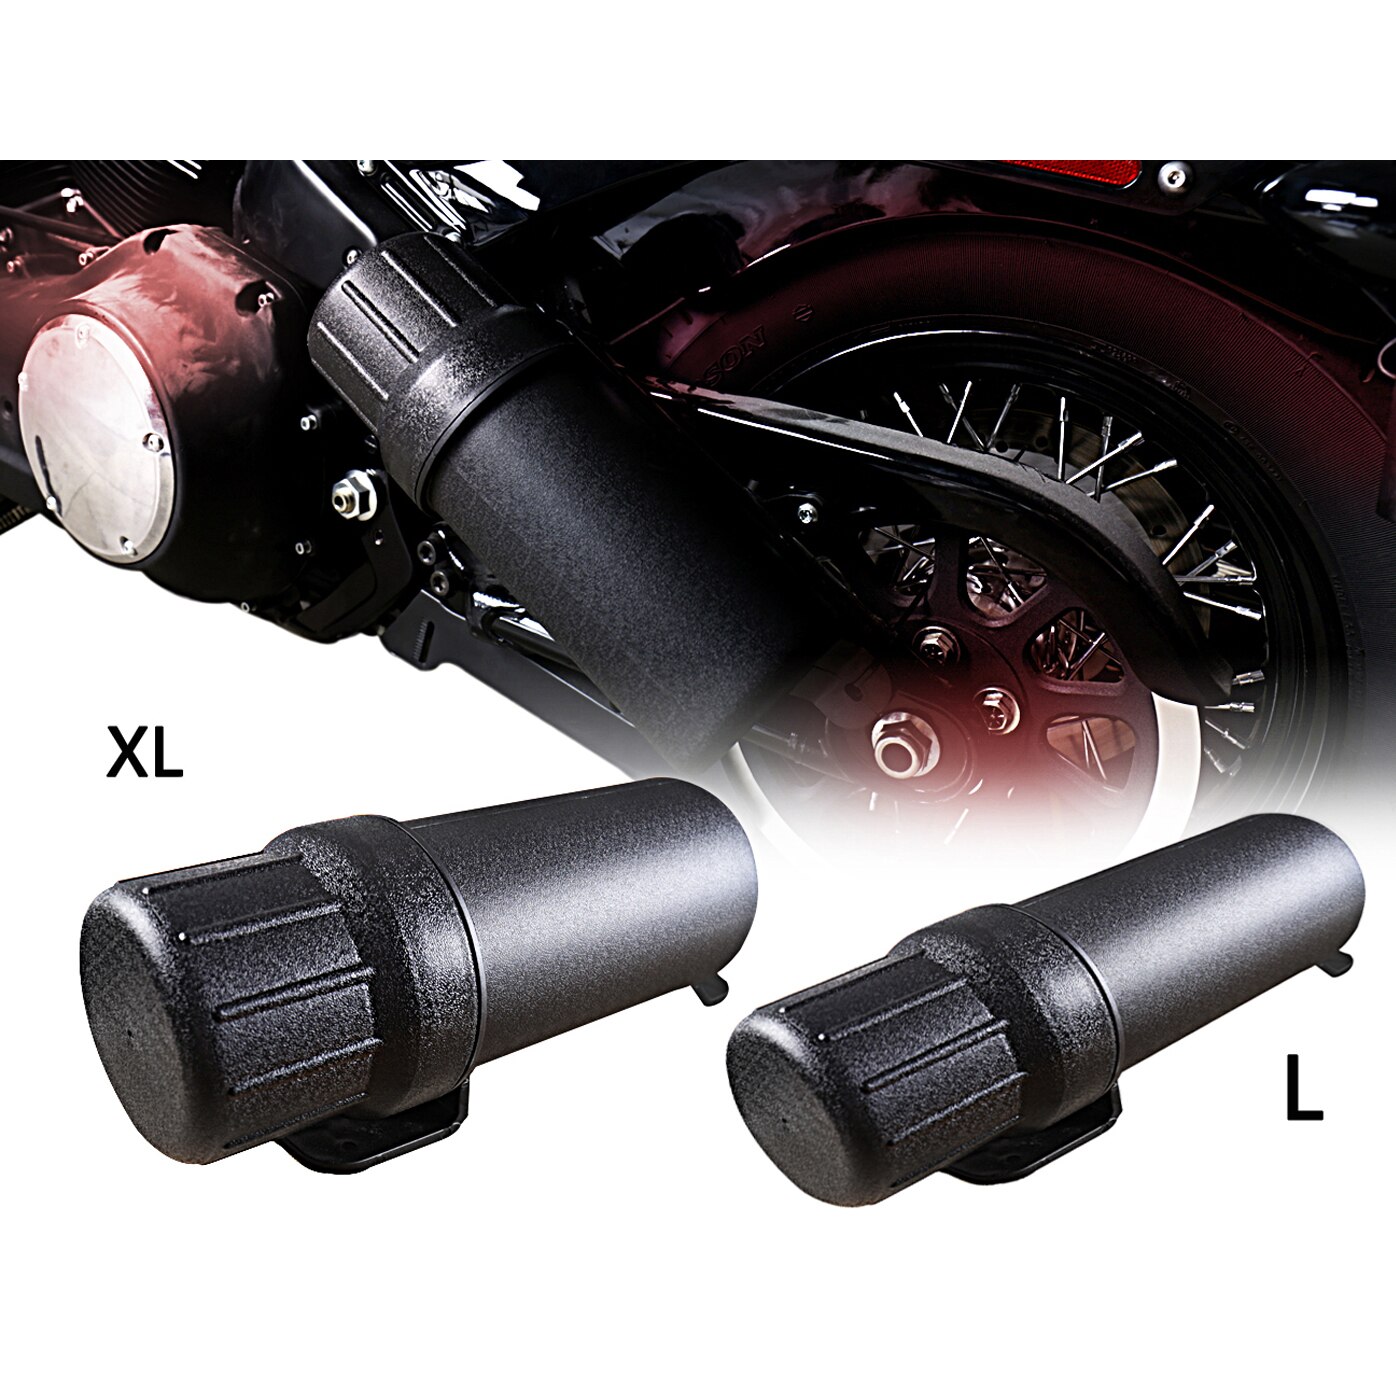 Universal-Off-Road-Motos-Motorcycle-Accessories-Waterproof-Tool-Tube-Gloves-Raincoat-Storage-Box